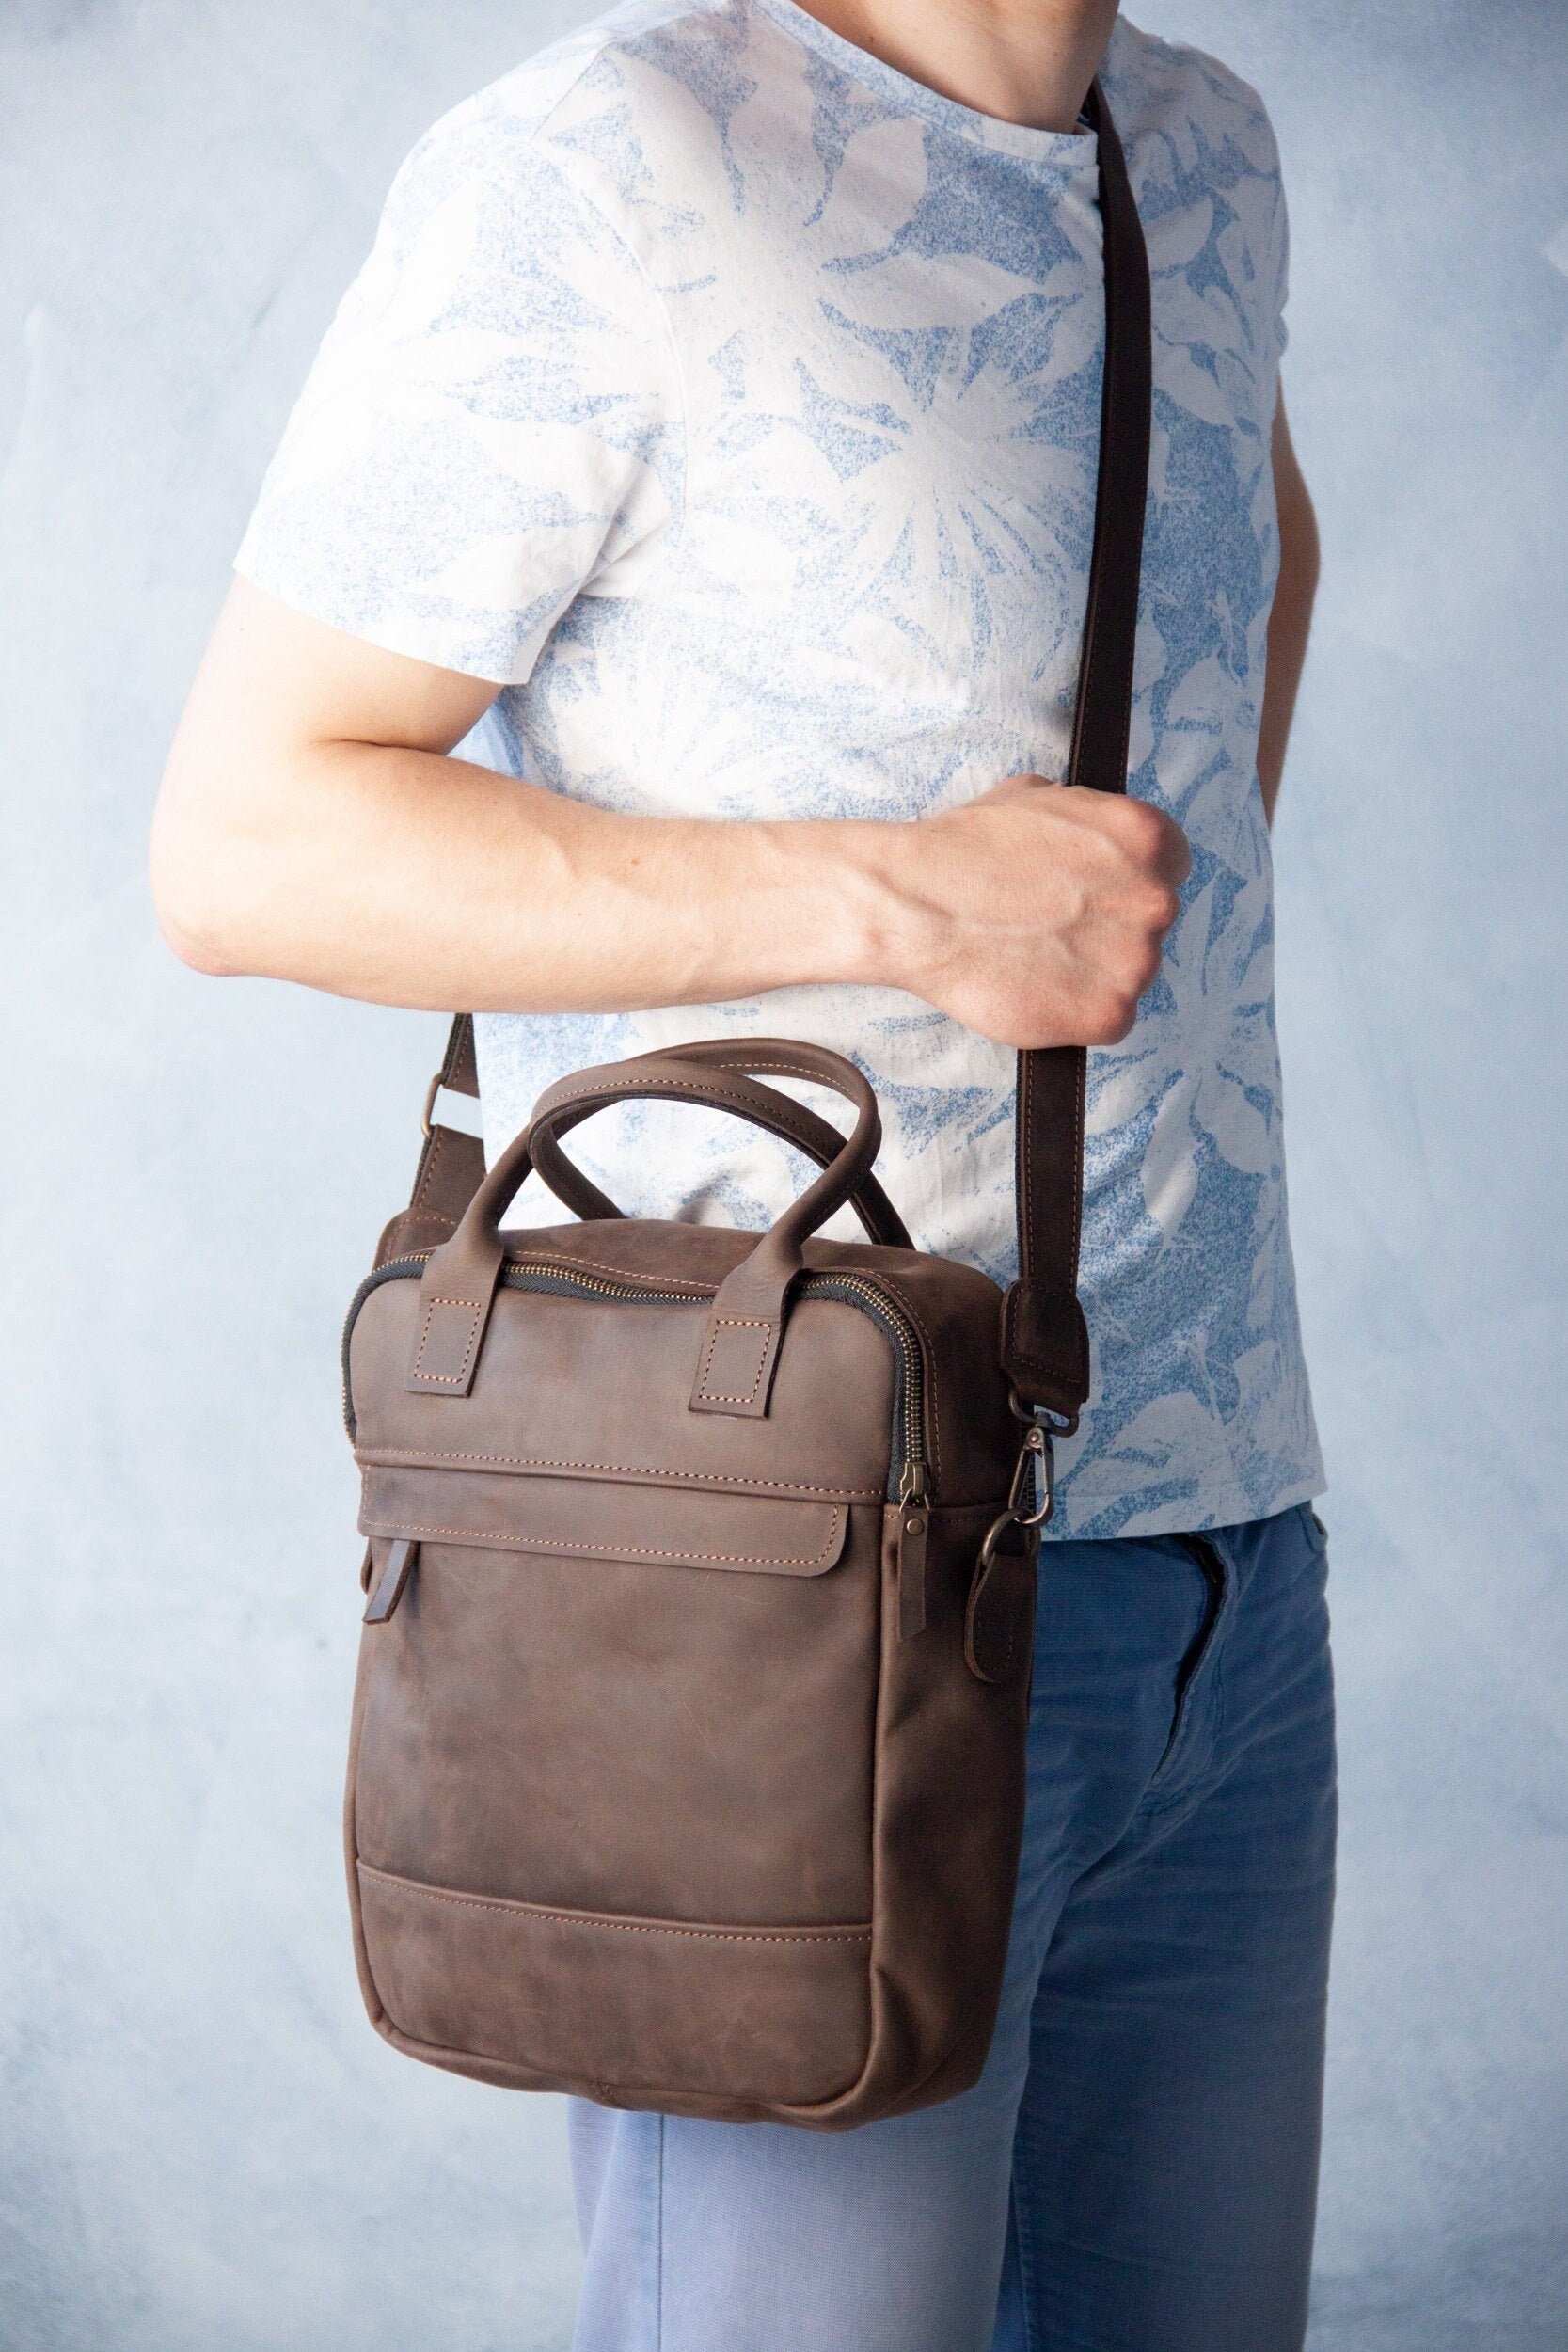 MNODWLOF Small Crossbody Bags for Men Leather Shoulder Bag Messenger Travel Man  Purse Handbag for iPad 9.7 Work Business Brown - Yahoo Shopping